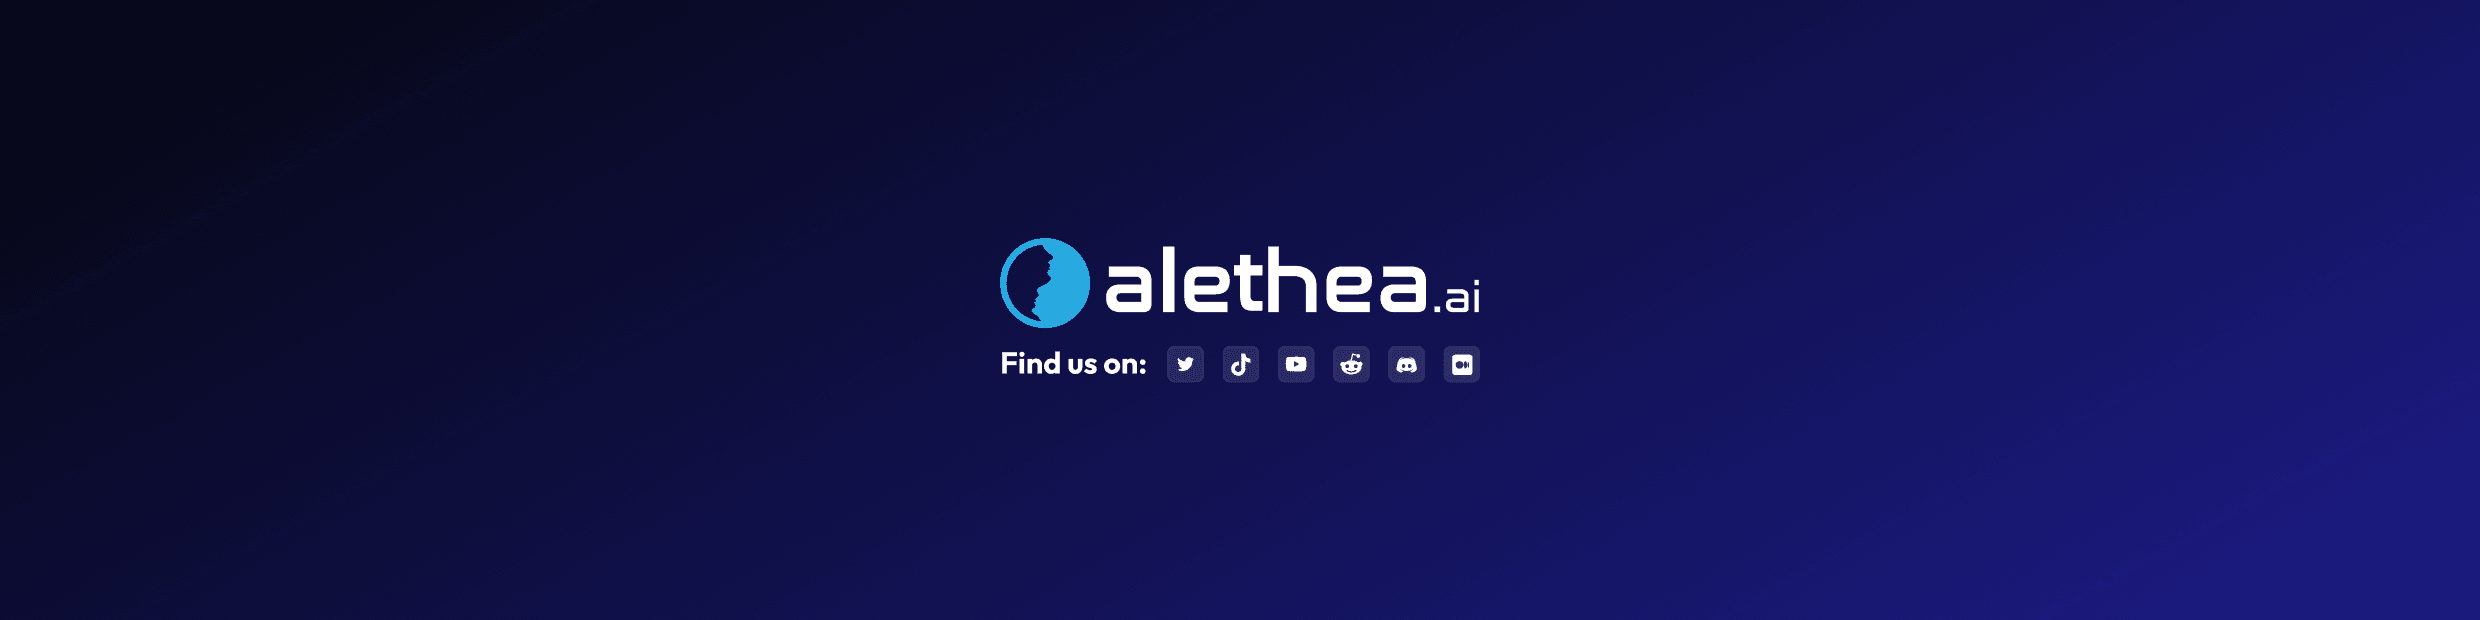 Alethea_AI banner